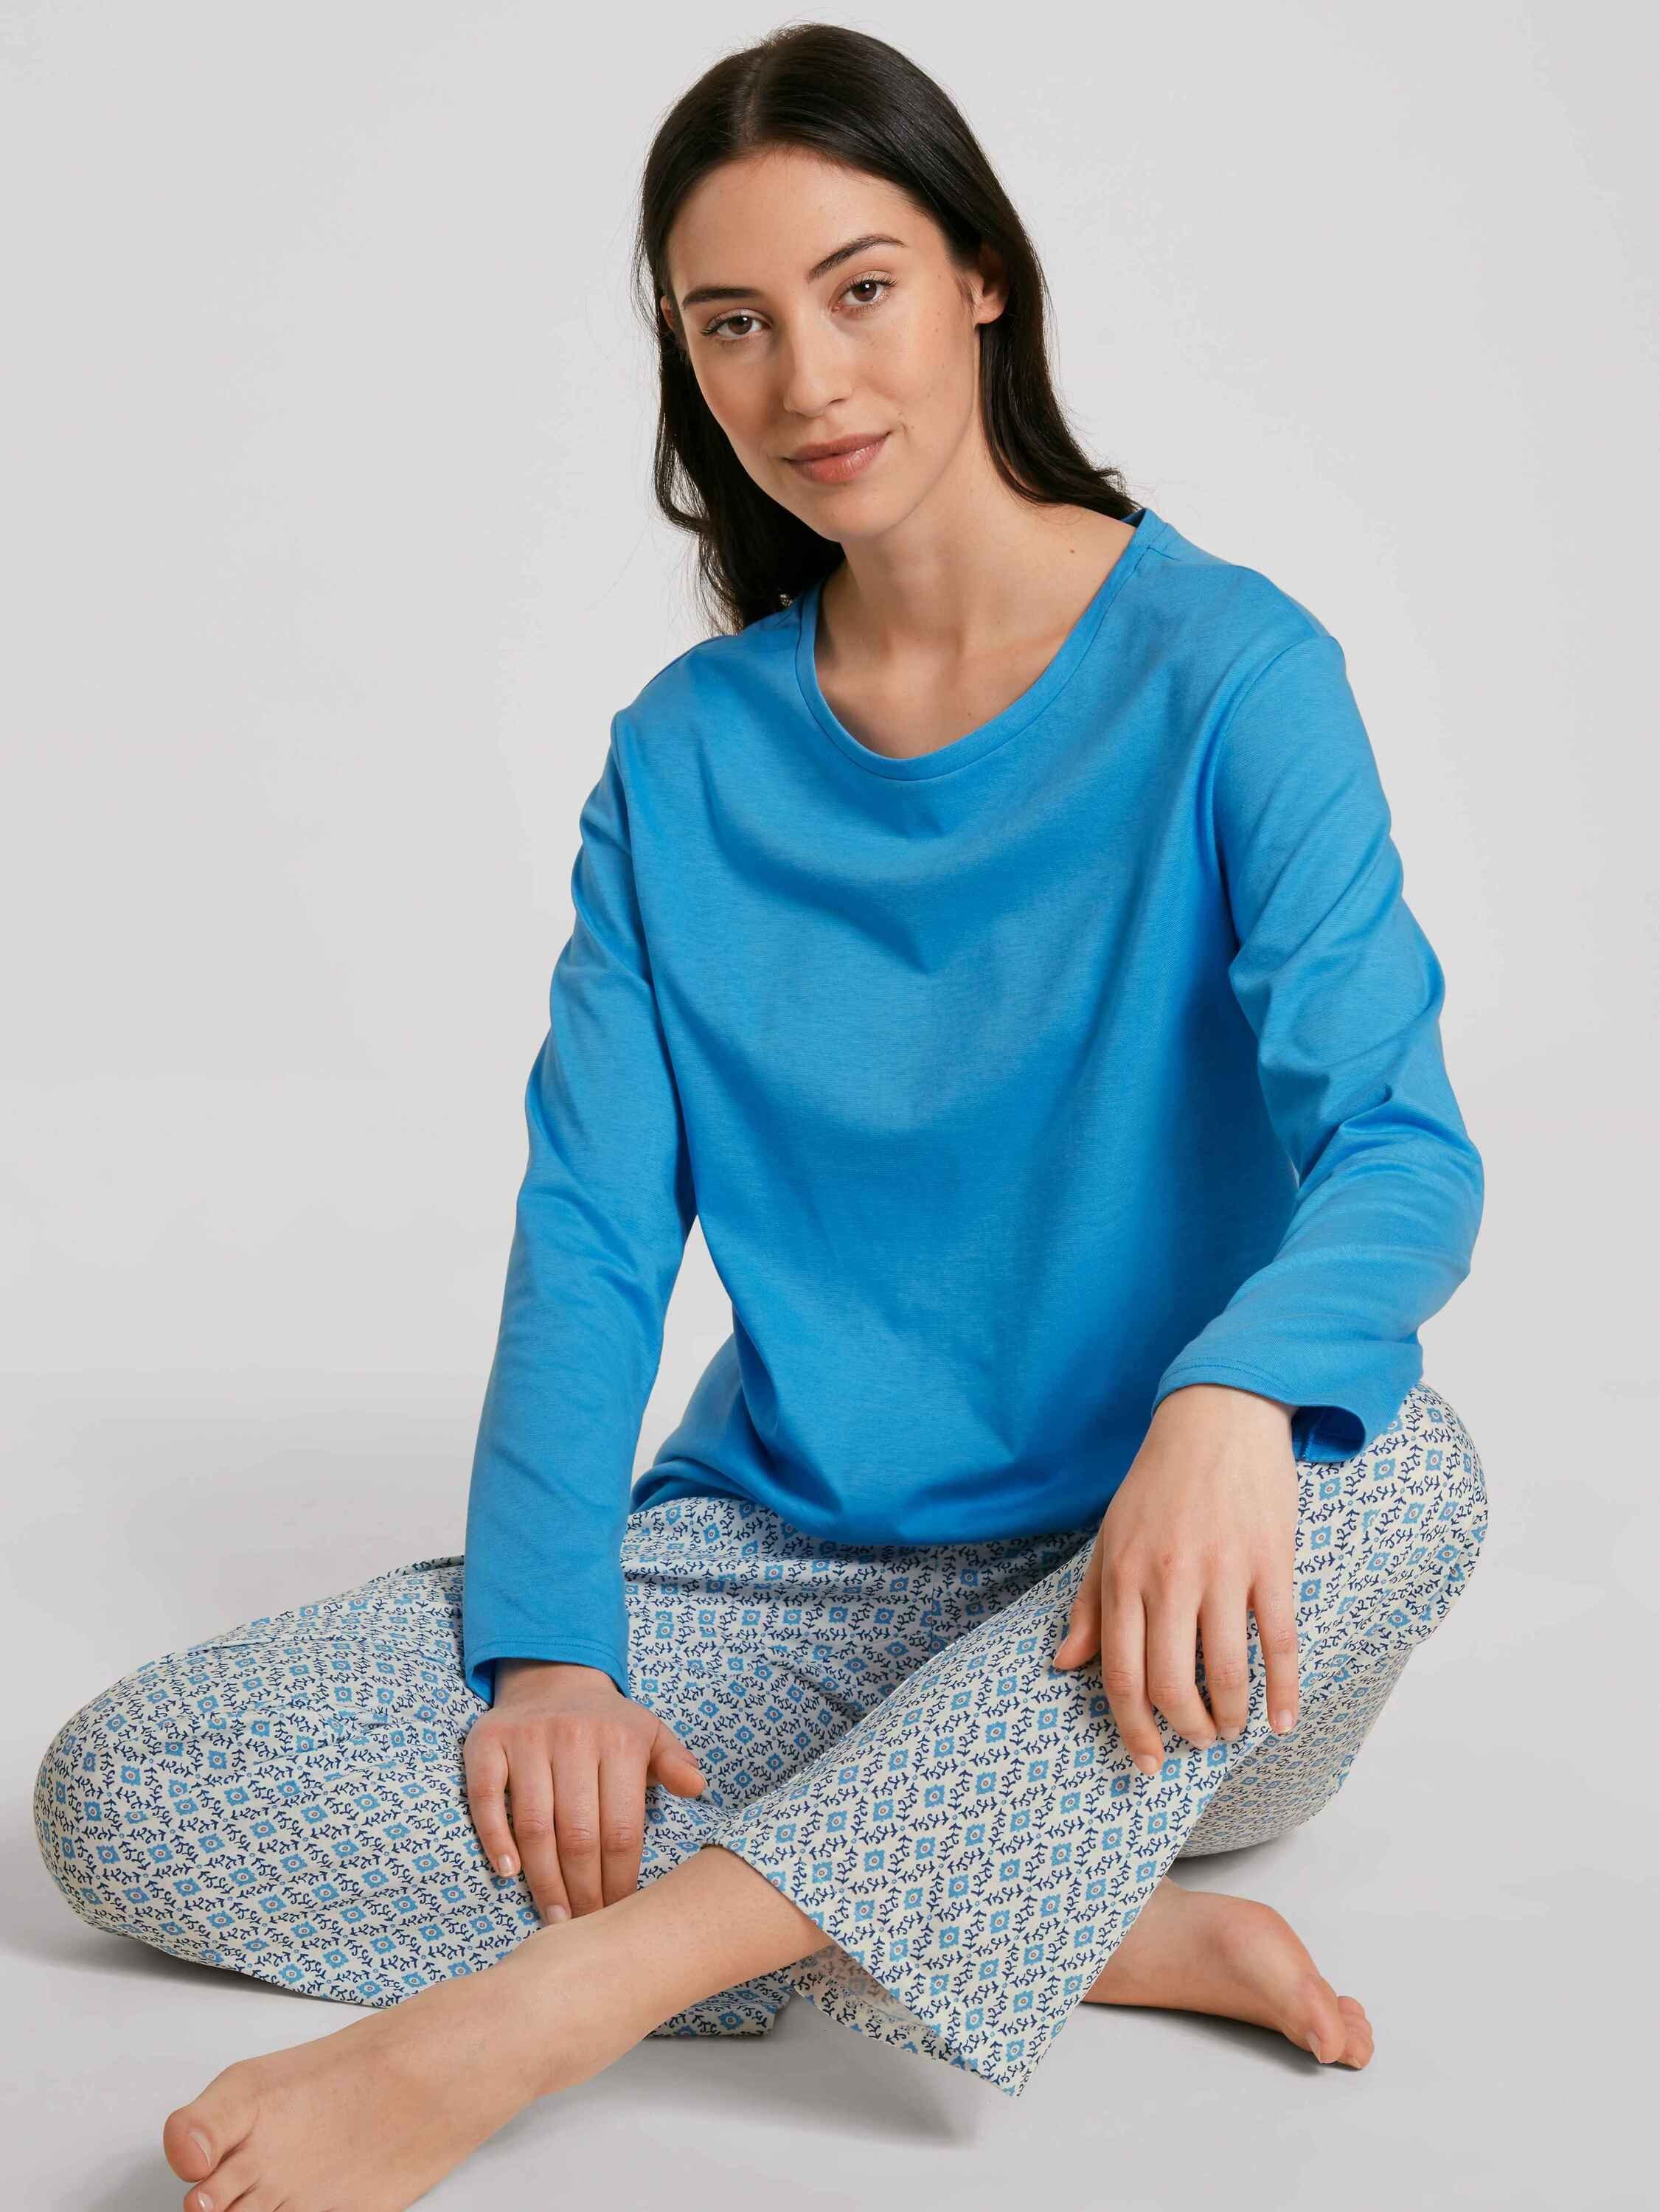 Pyjama blue azurit CALIDA (2 tlg) Pyjama, lang